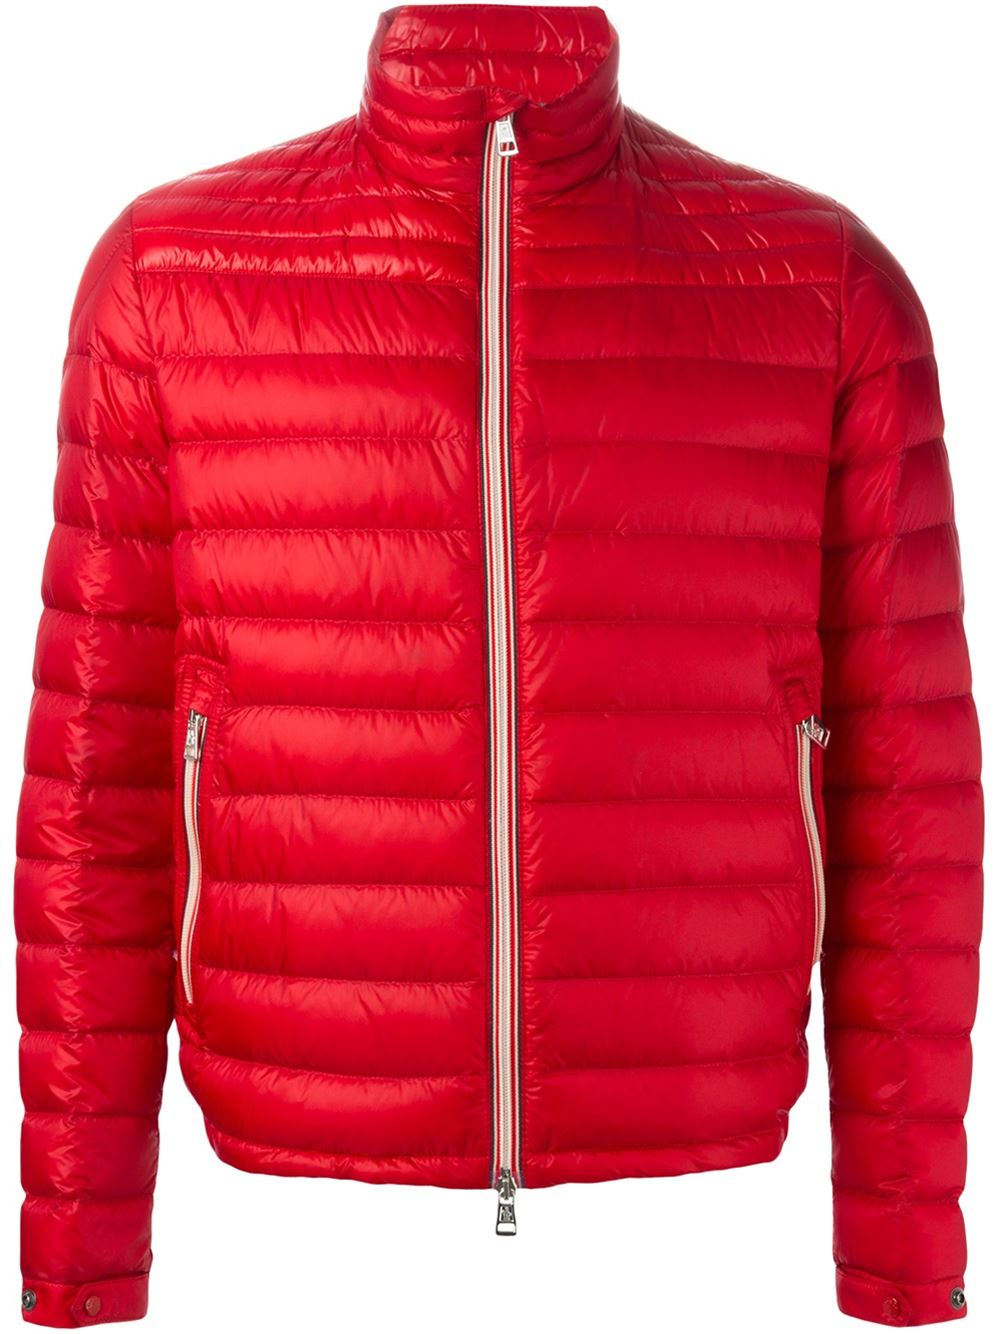 Moncler 'Daniel' Padded Jacket in Red for Men - Lyst